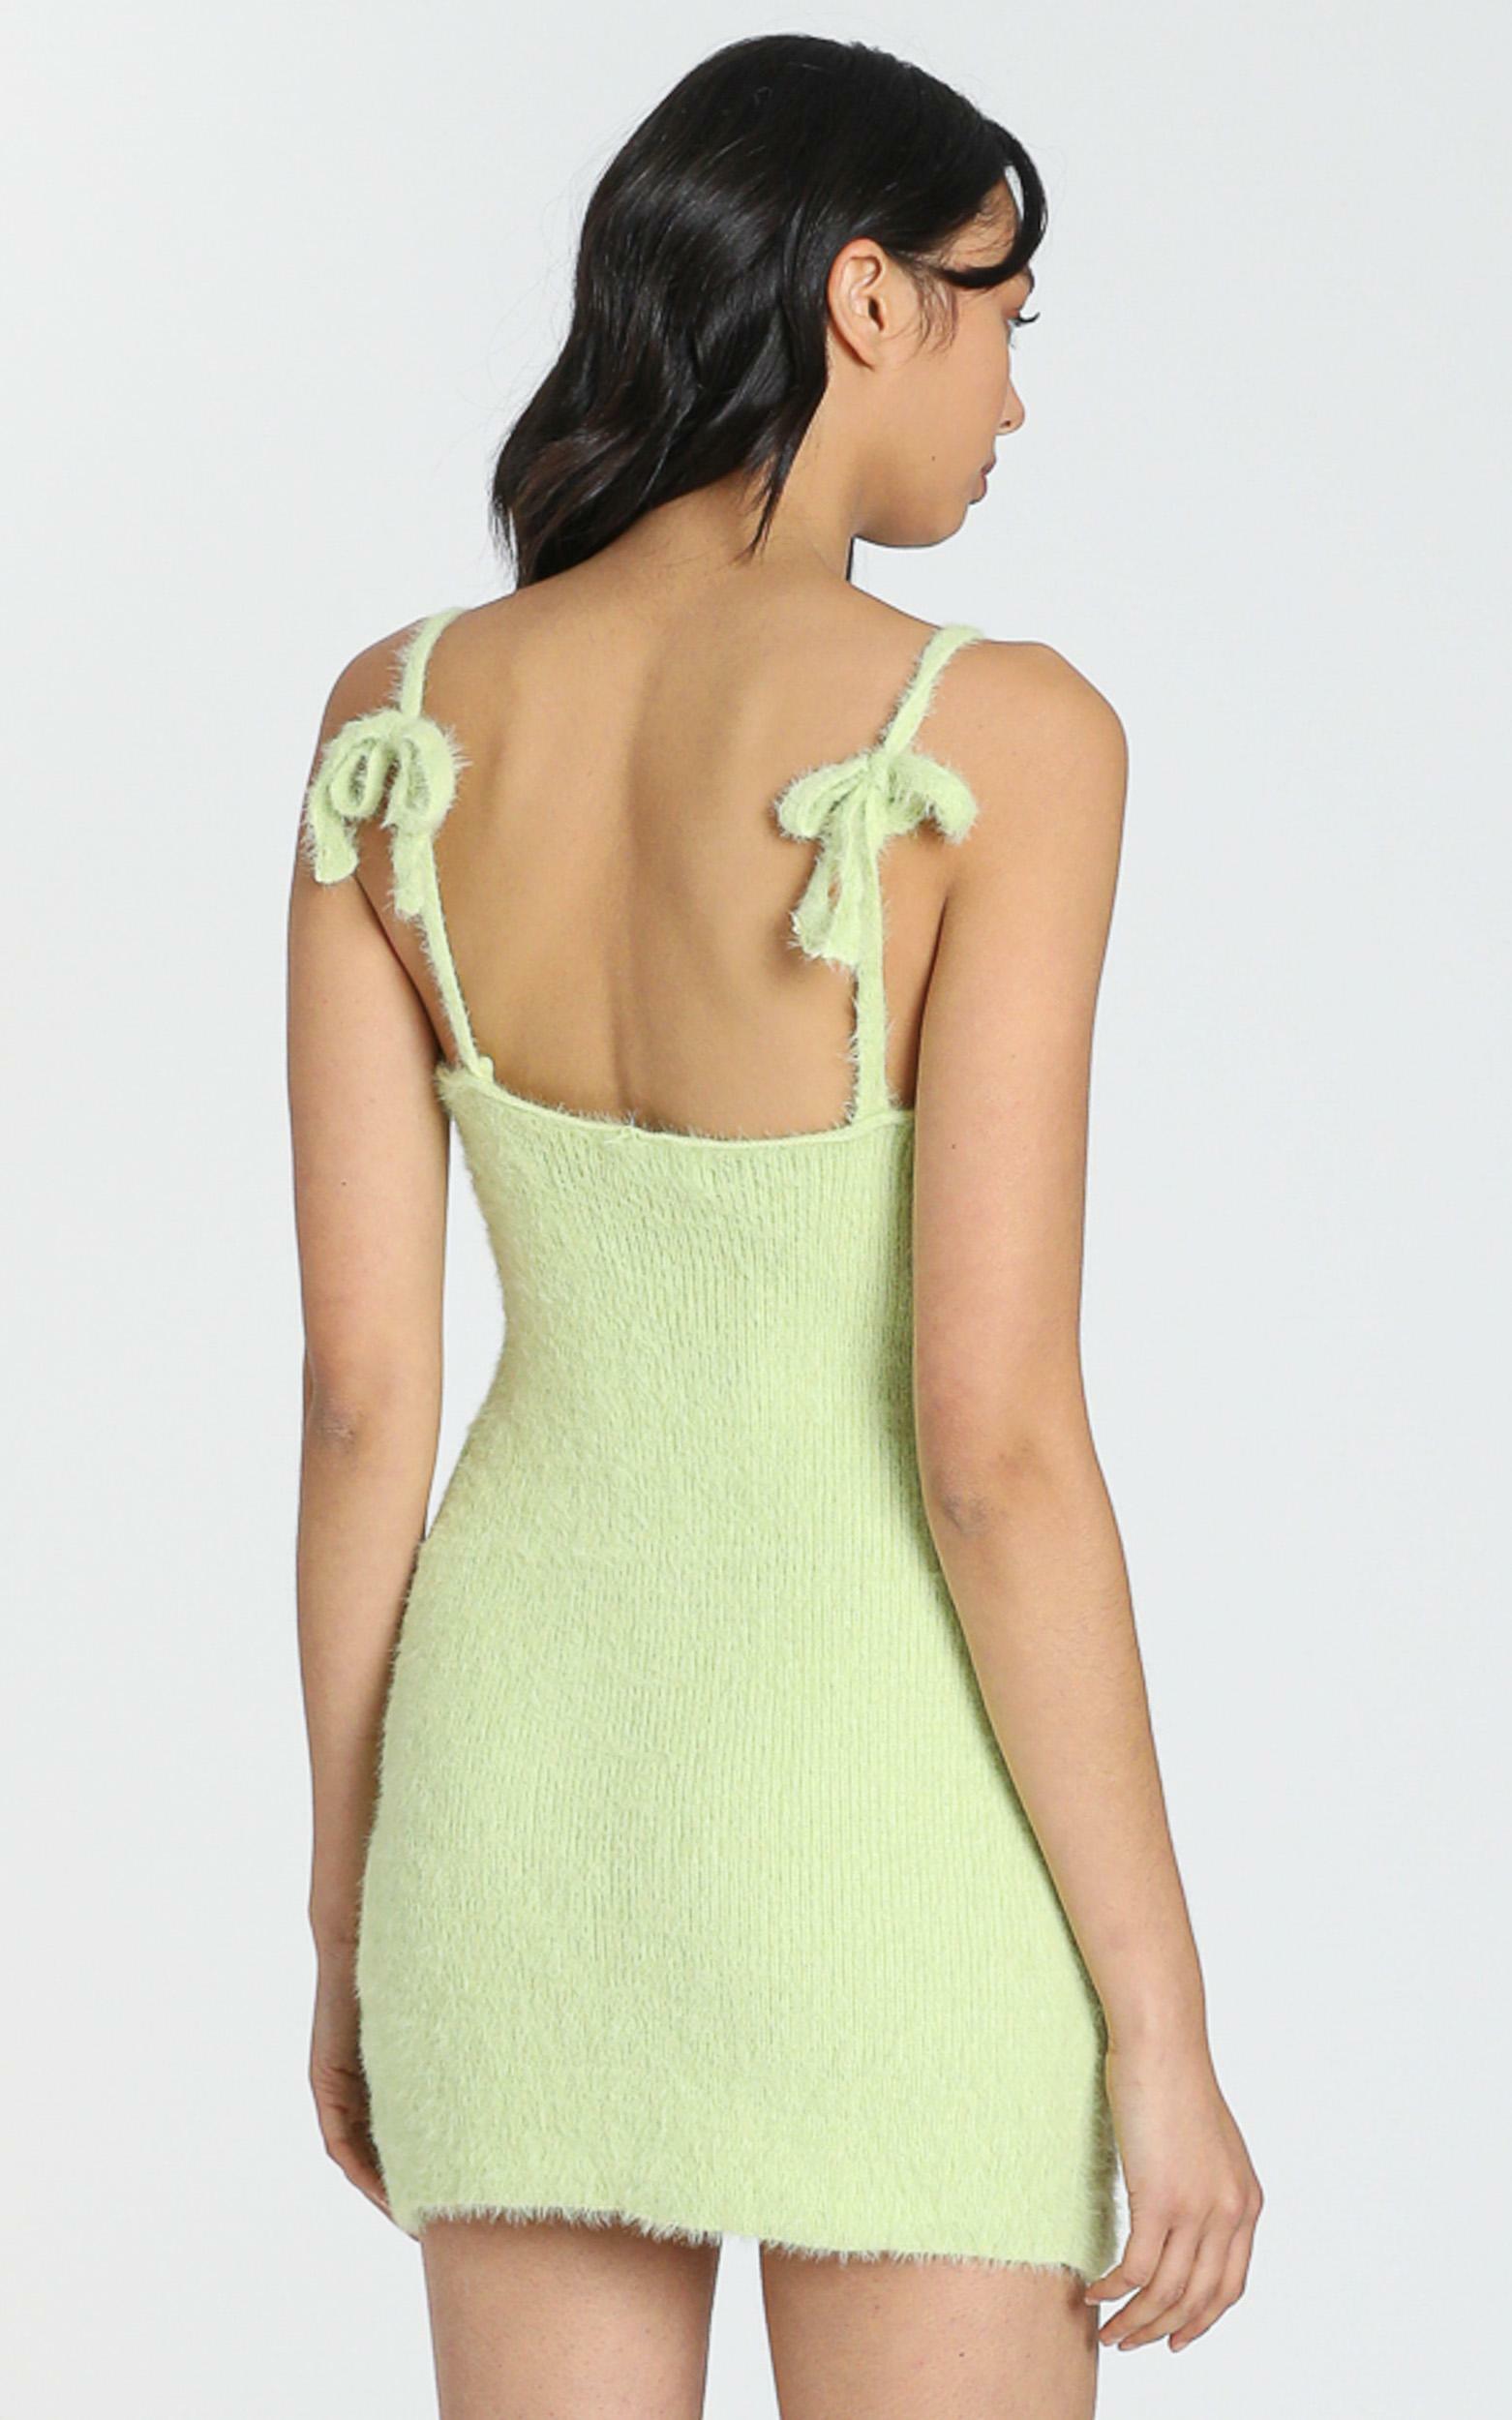 Leni Fluffy Knit Dress in Lime - S, GRN1, hi-res image number null